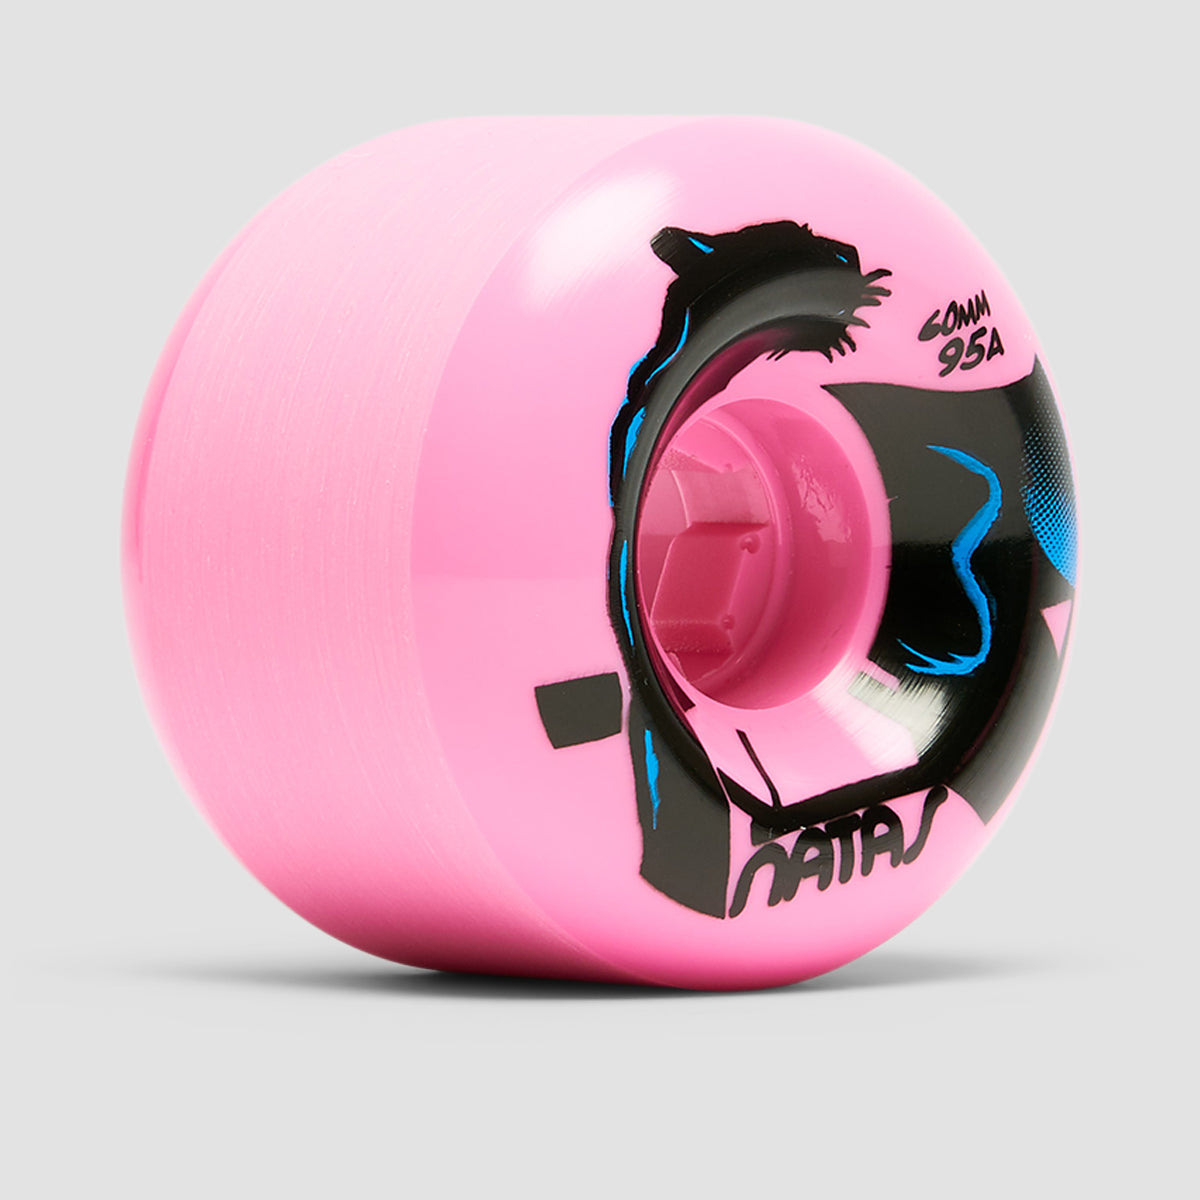 Slime Balls Natas Kaupas Panther Vomits 95a Skateboard Wheels Pink 60mm